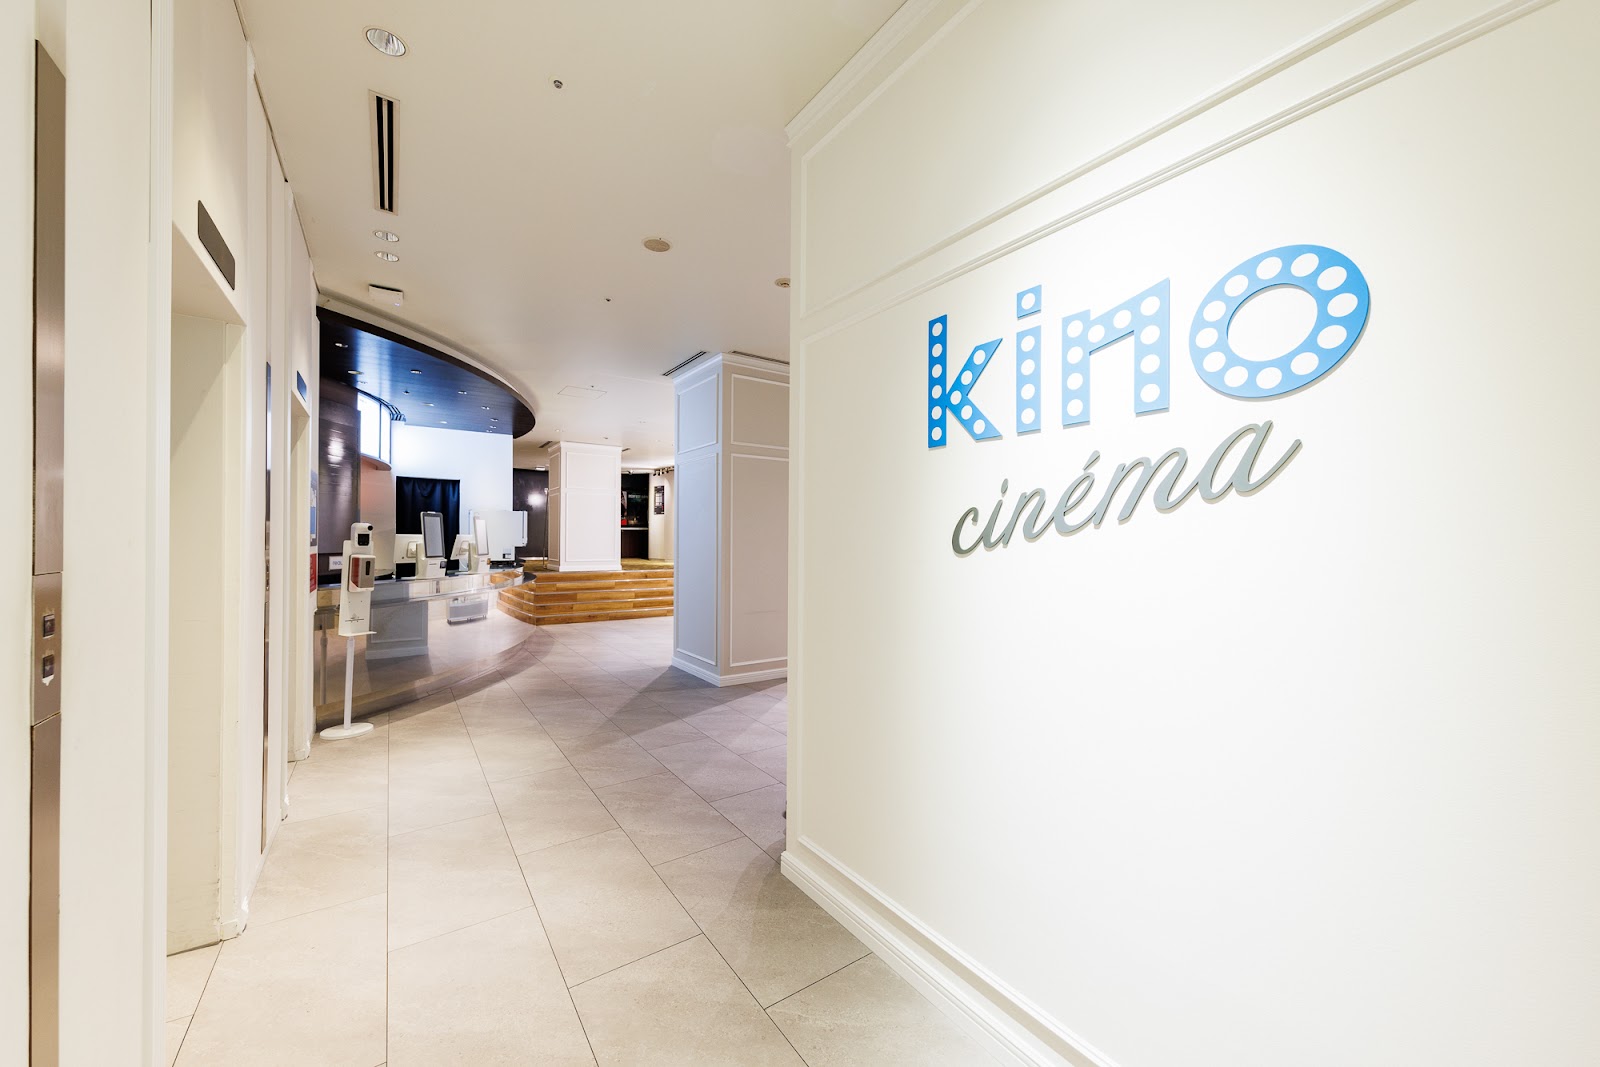 kino cinema新宿のイメージ